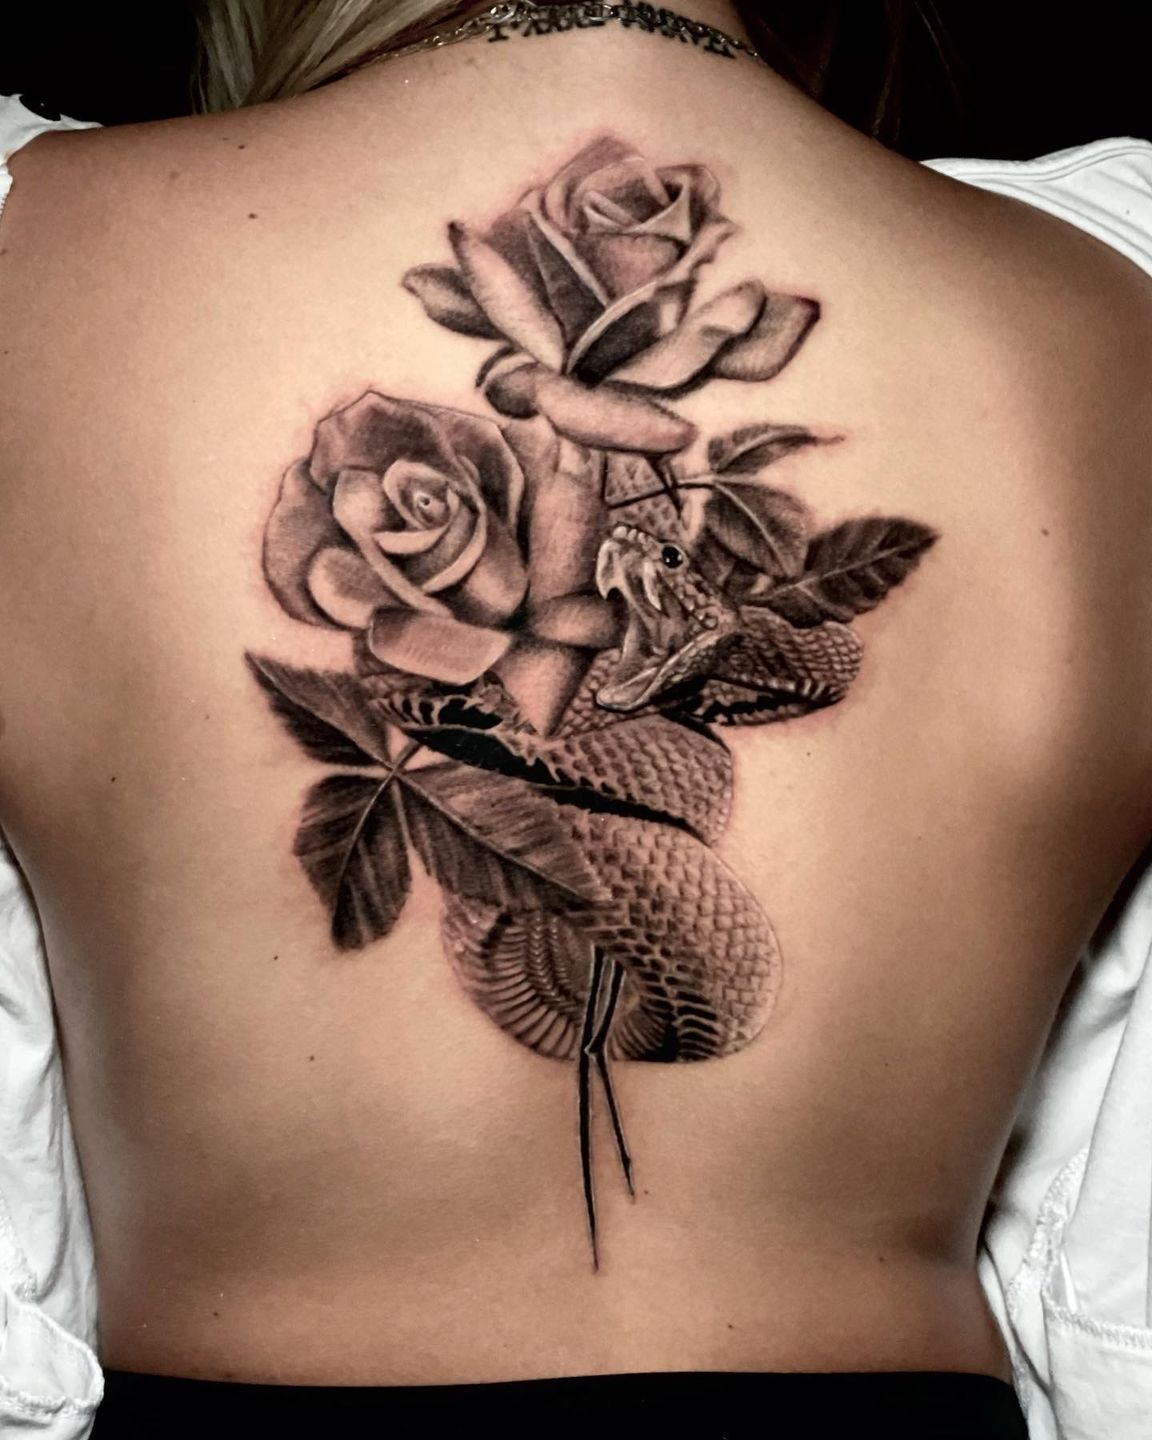 Realistic Black Mamba Snake Rose Temporary Tattoo For Girl Women Adults  Peony Flower Tattoos Sticker Glory Rose Tatoos Decor - Temporary Tattoos -  AliExpress